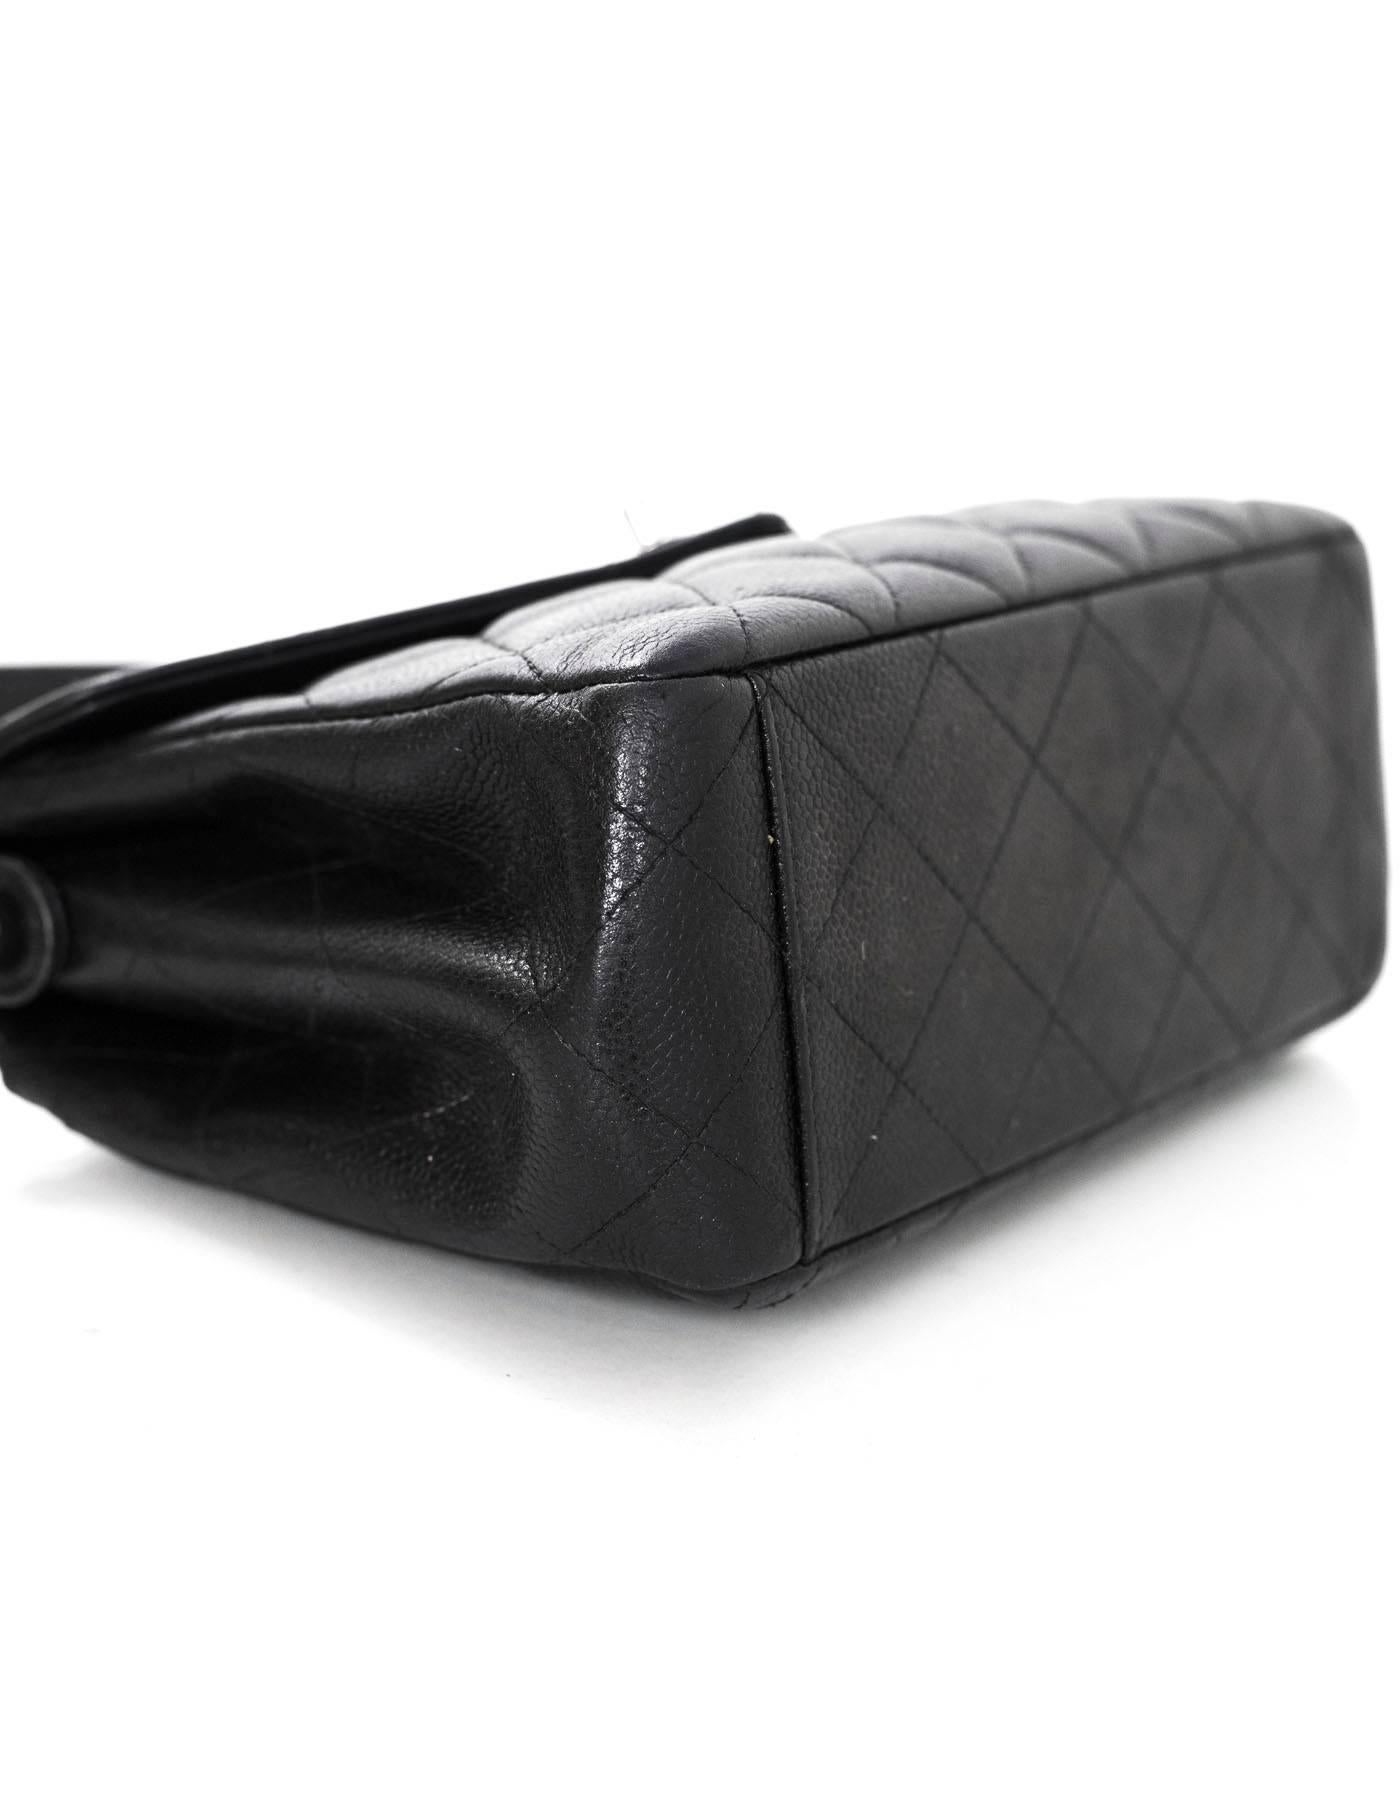 Chanel Black Quilted Caviar Leather Shoulder Bag 2